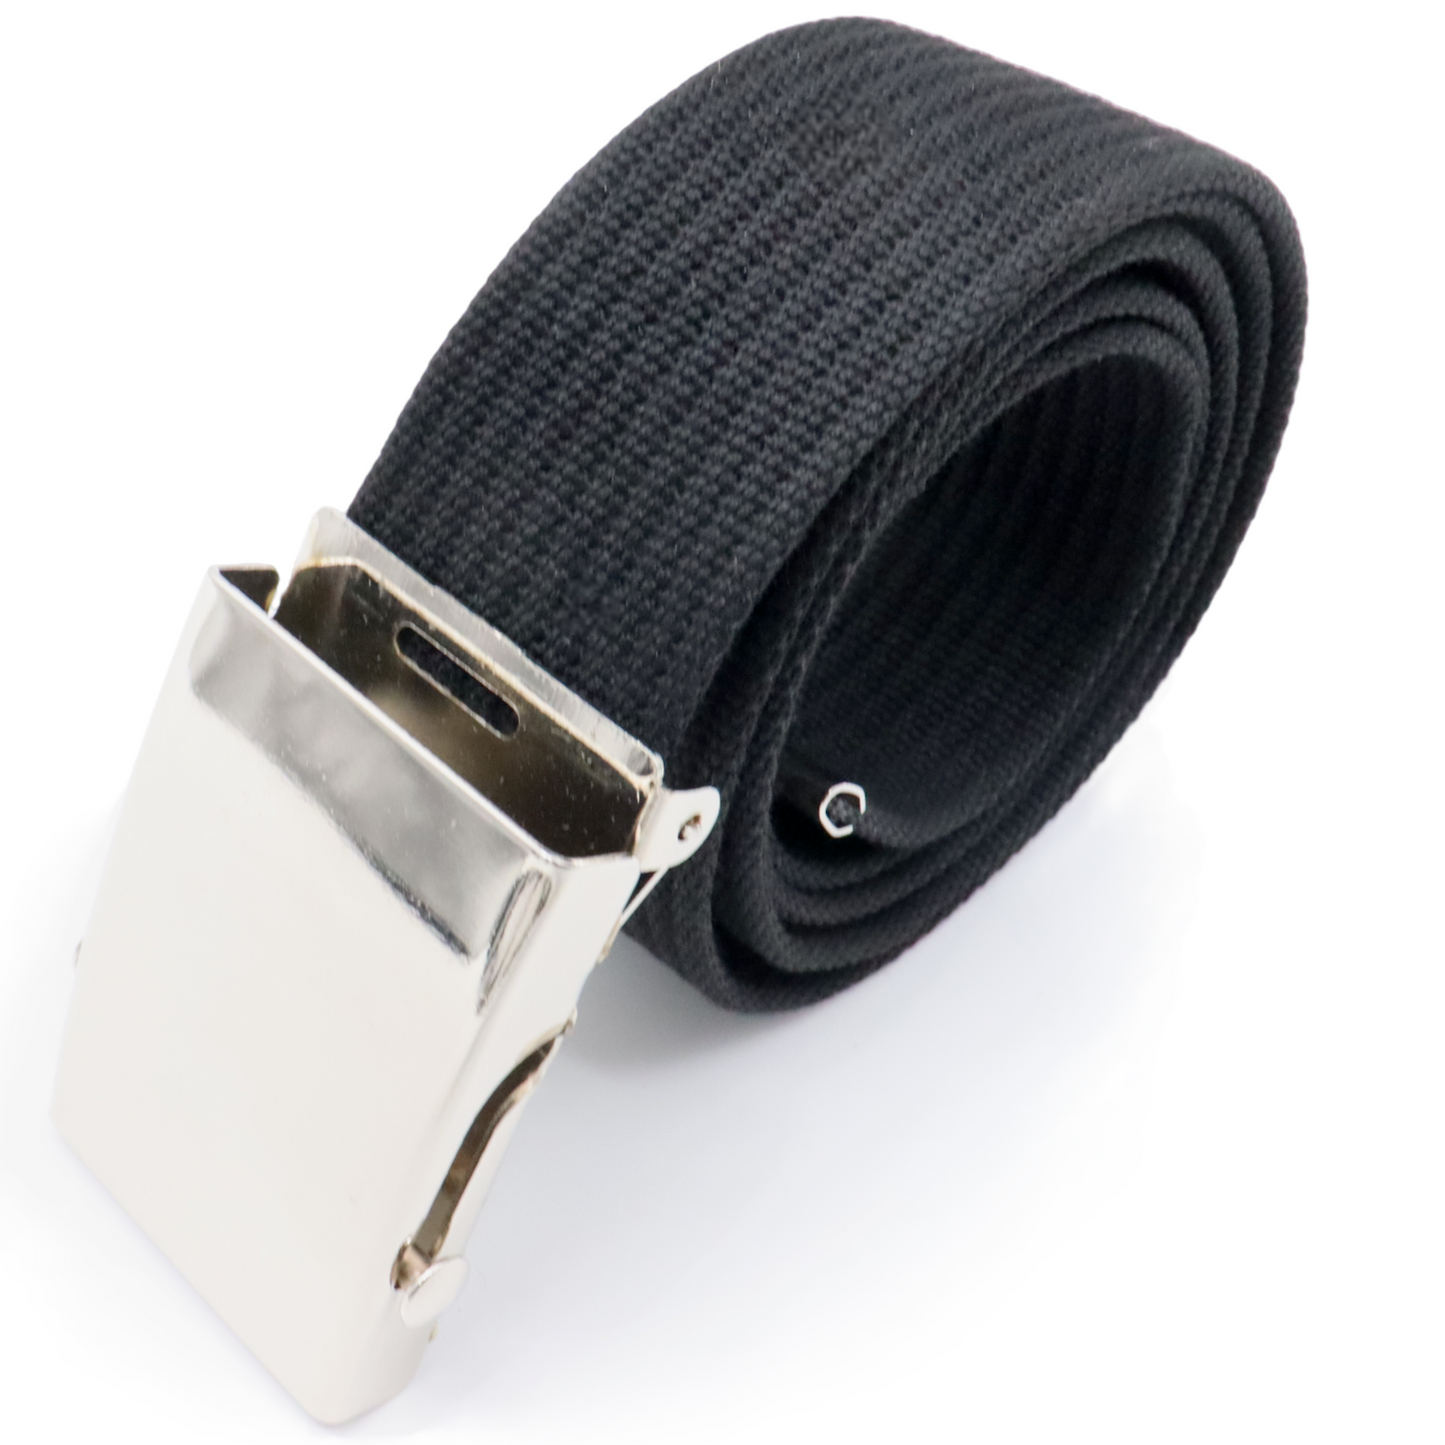 Safekeepers elastic belt - Stretch Belt - Braided Black and Tactical belt - Coupling Belt - 2 Pieces - Black